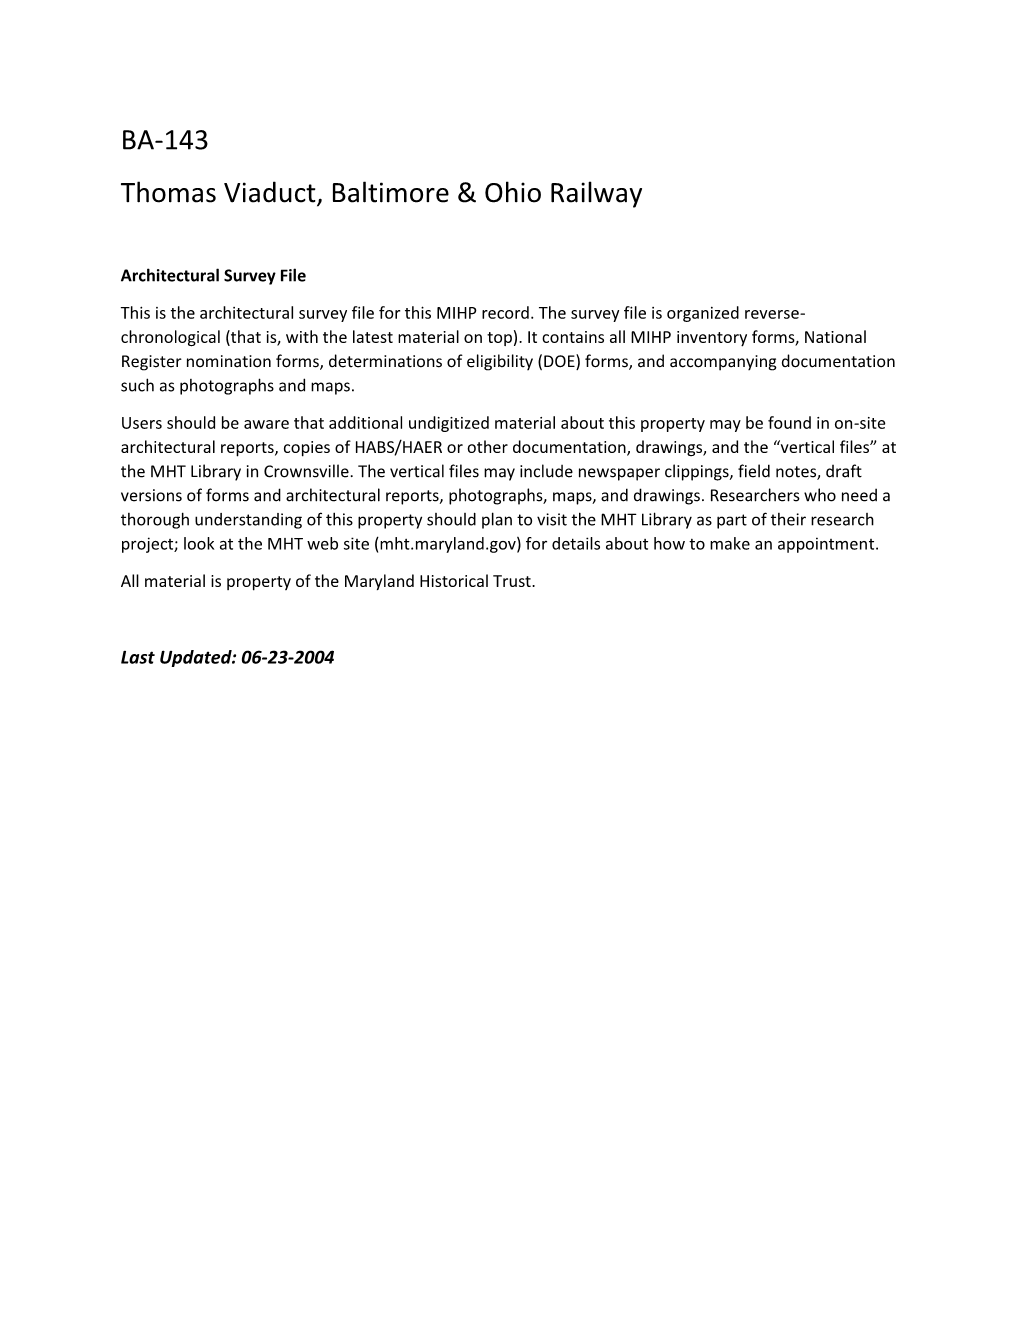 BA-143 Thomas Viaduct, Baltimore & Ohio Railway